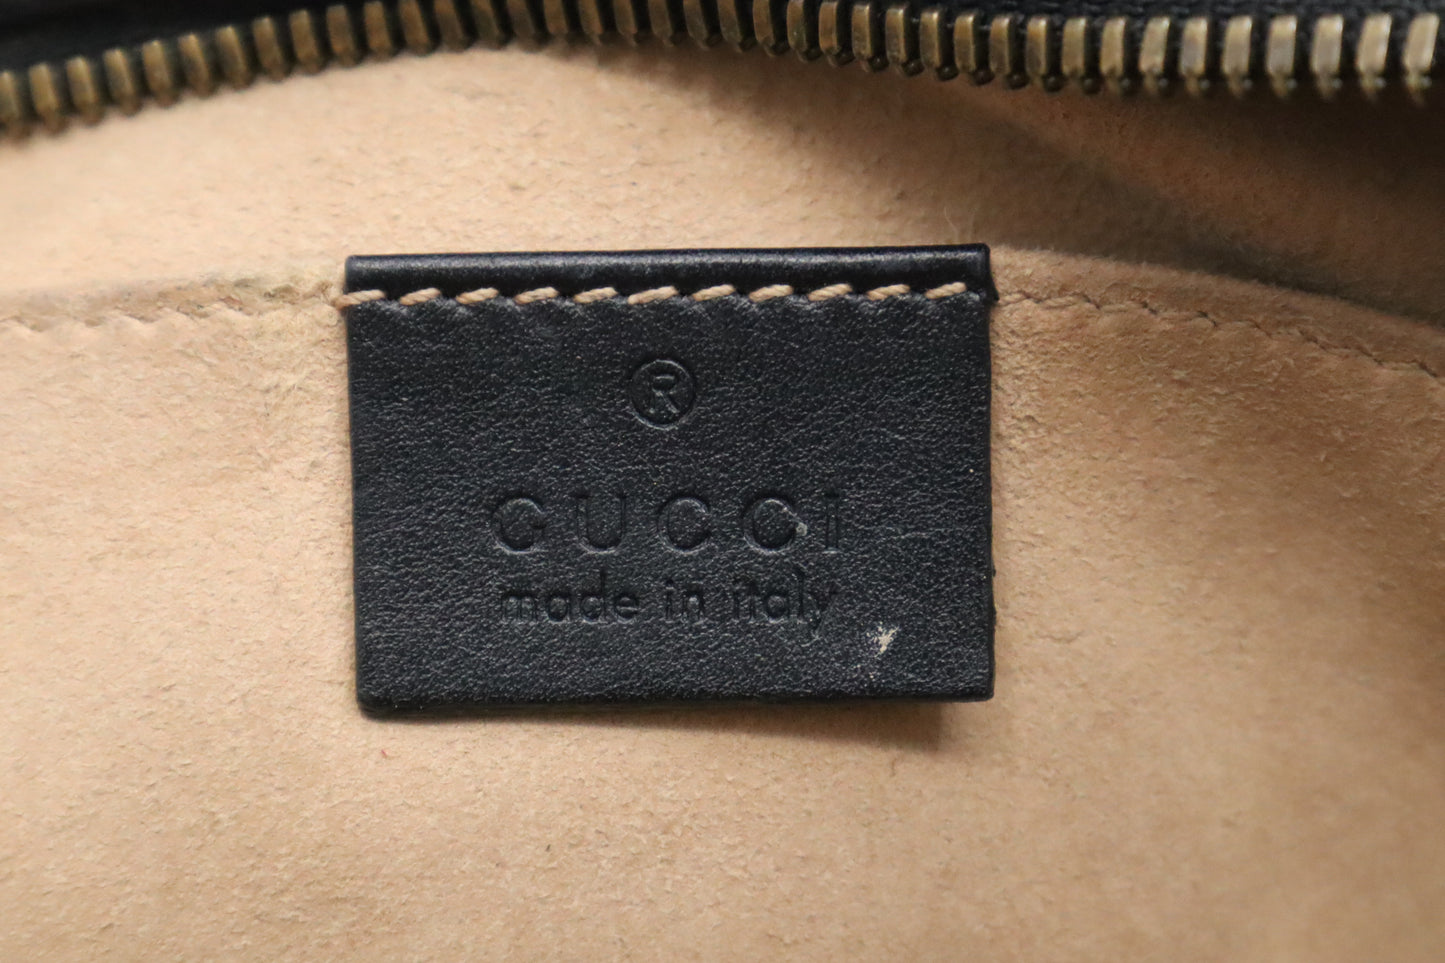 Gucci Marmont Shoulder Bag in Black Leather